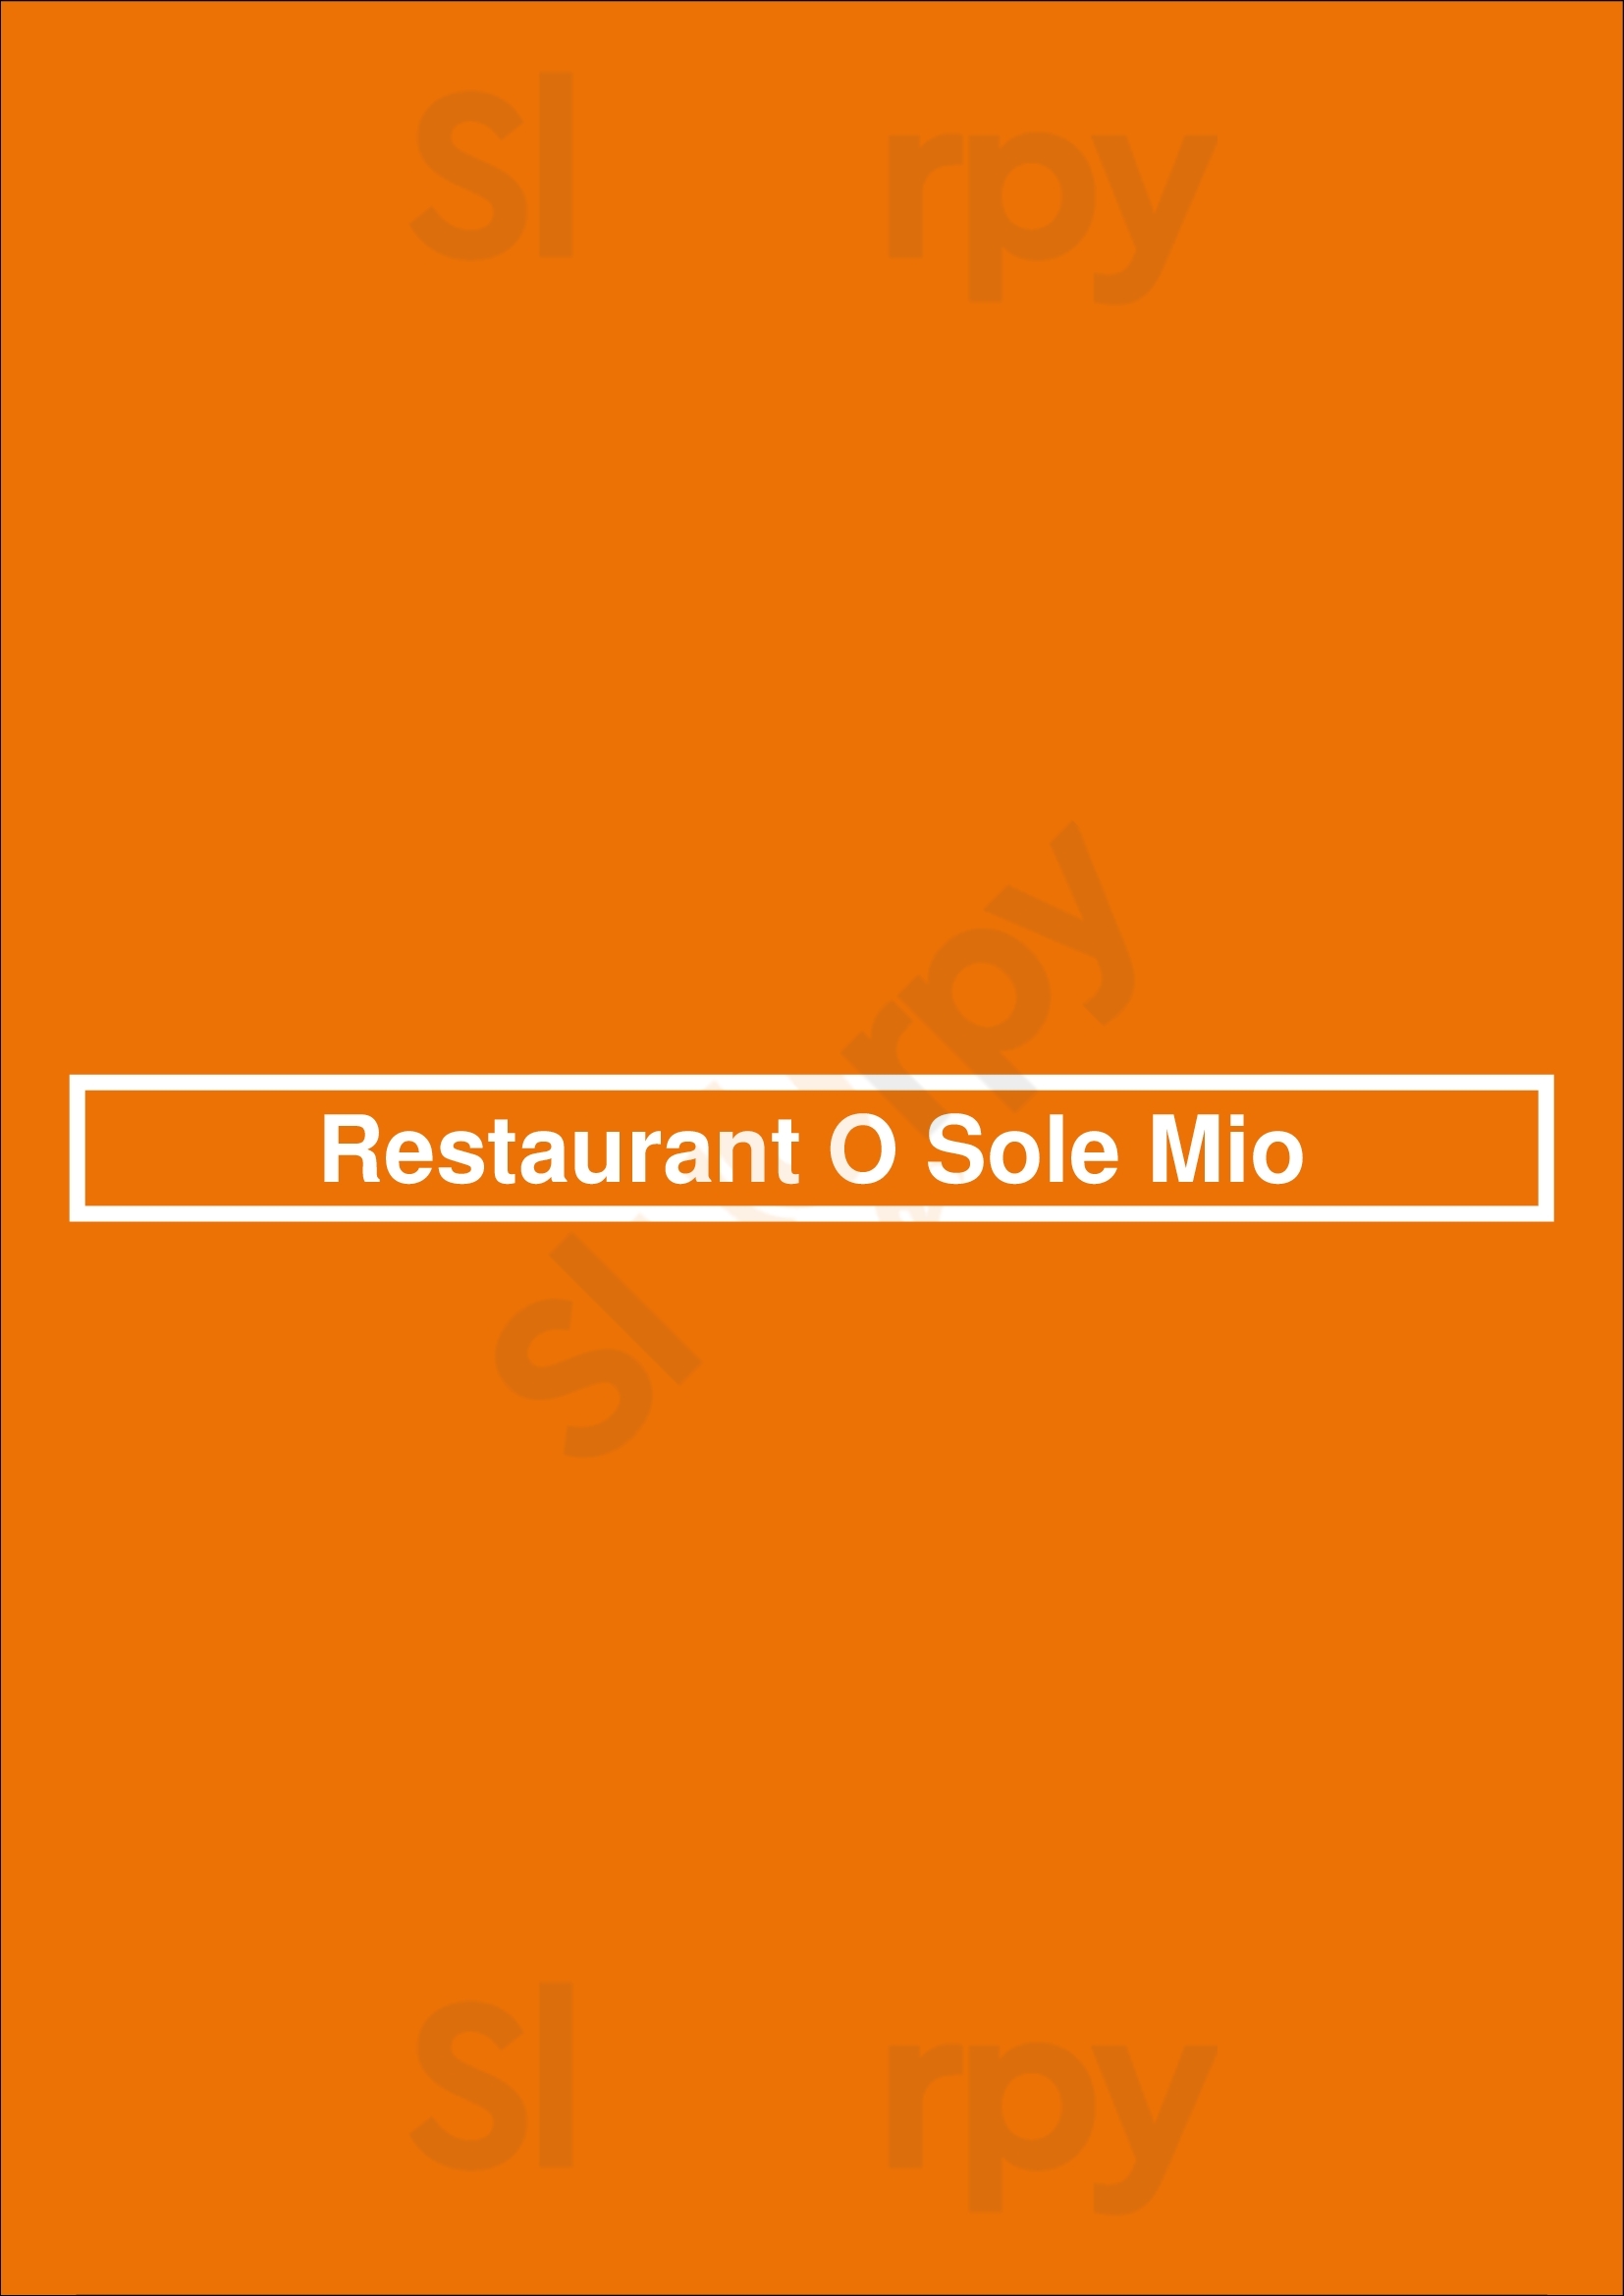 Restaurant O Sole Mio Amsterdam Menu - 1